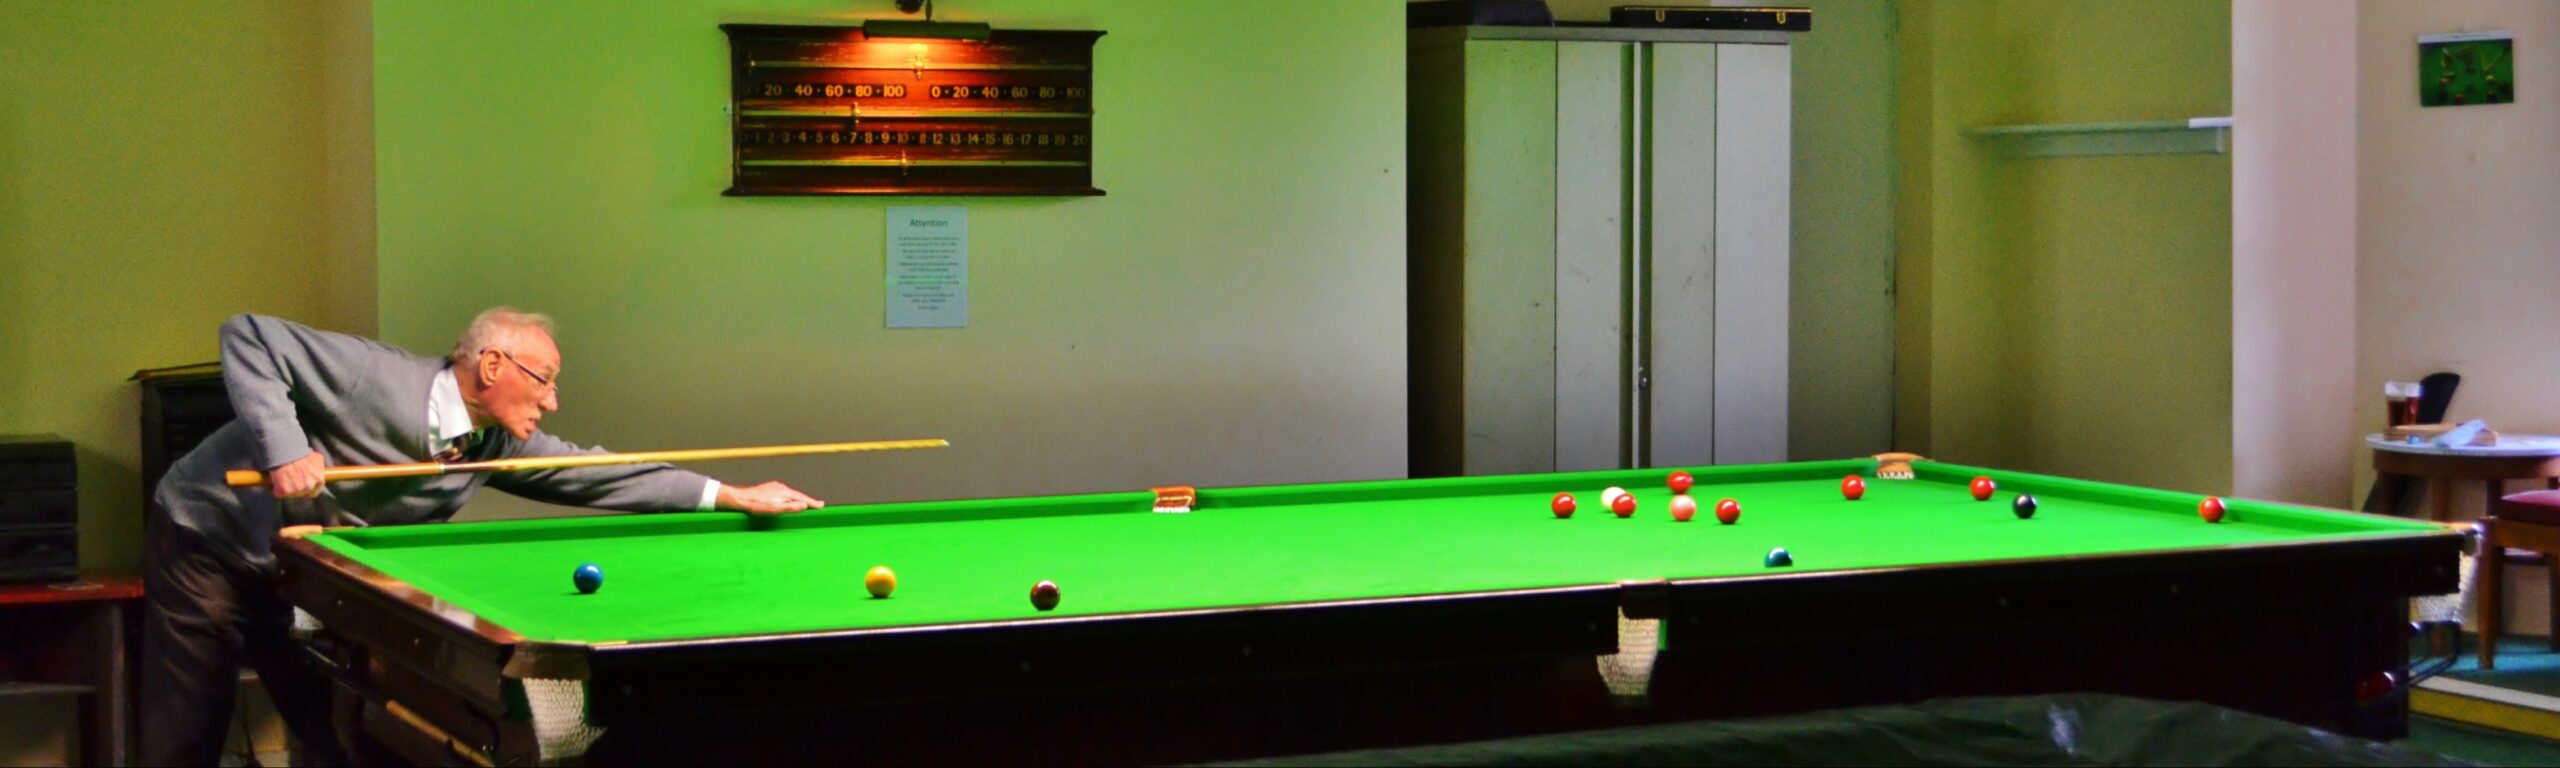 Oak House Sports & Social Club Snooker Room